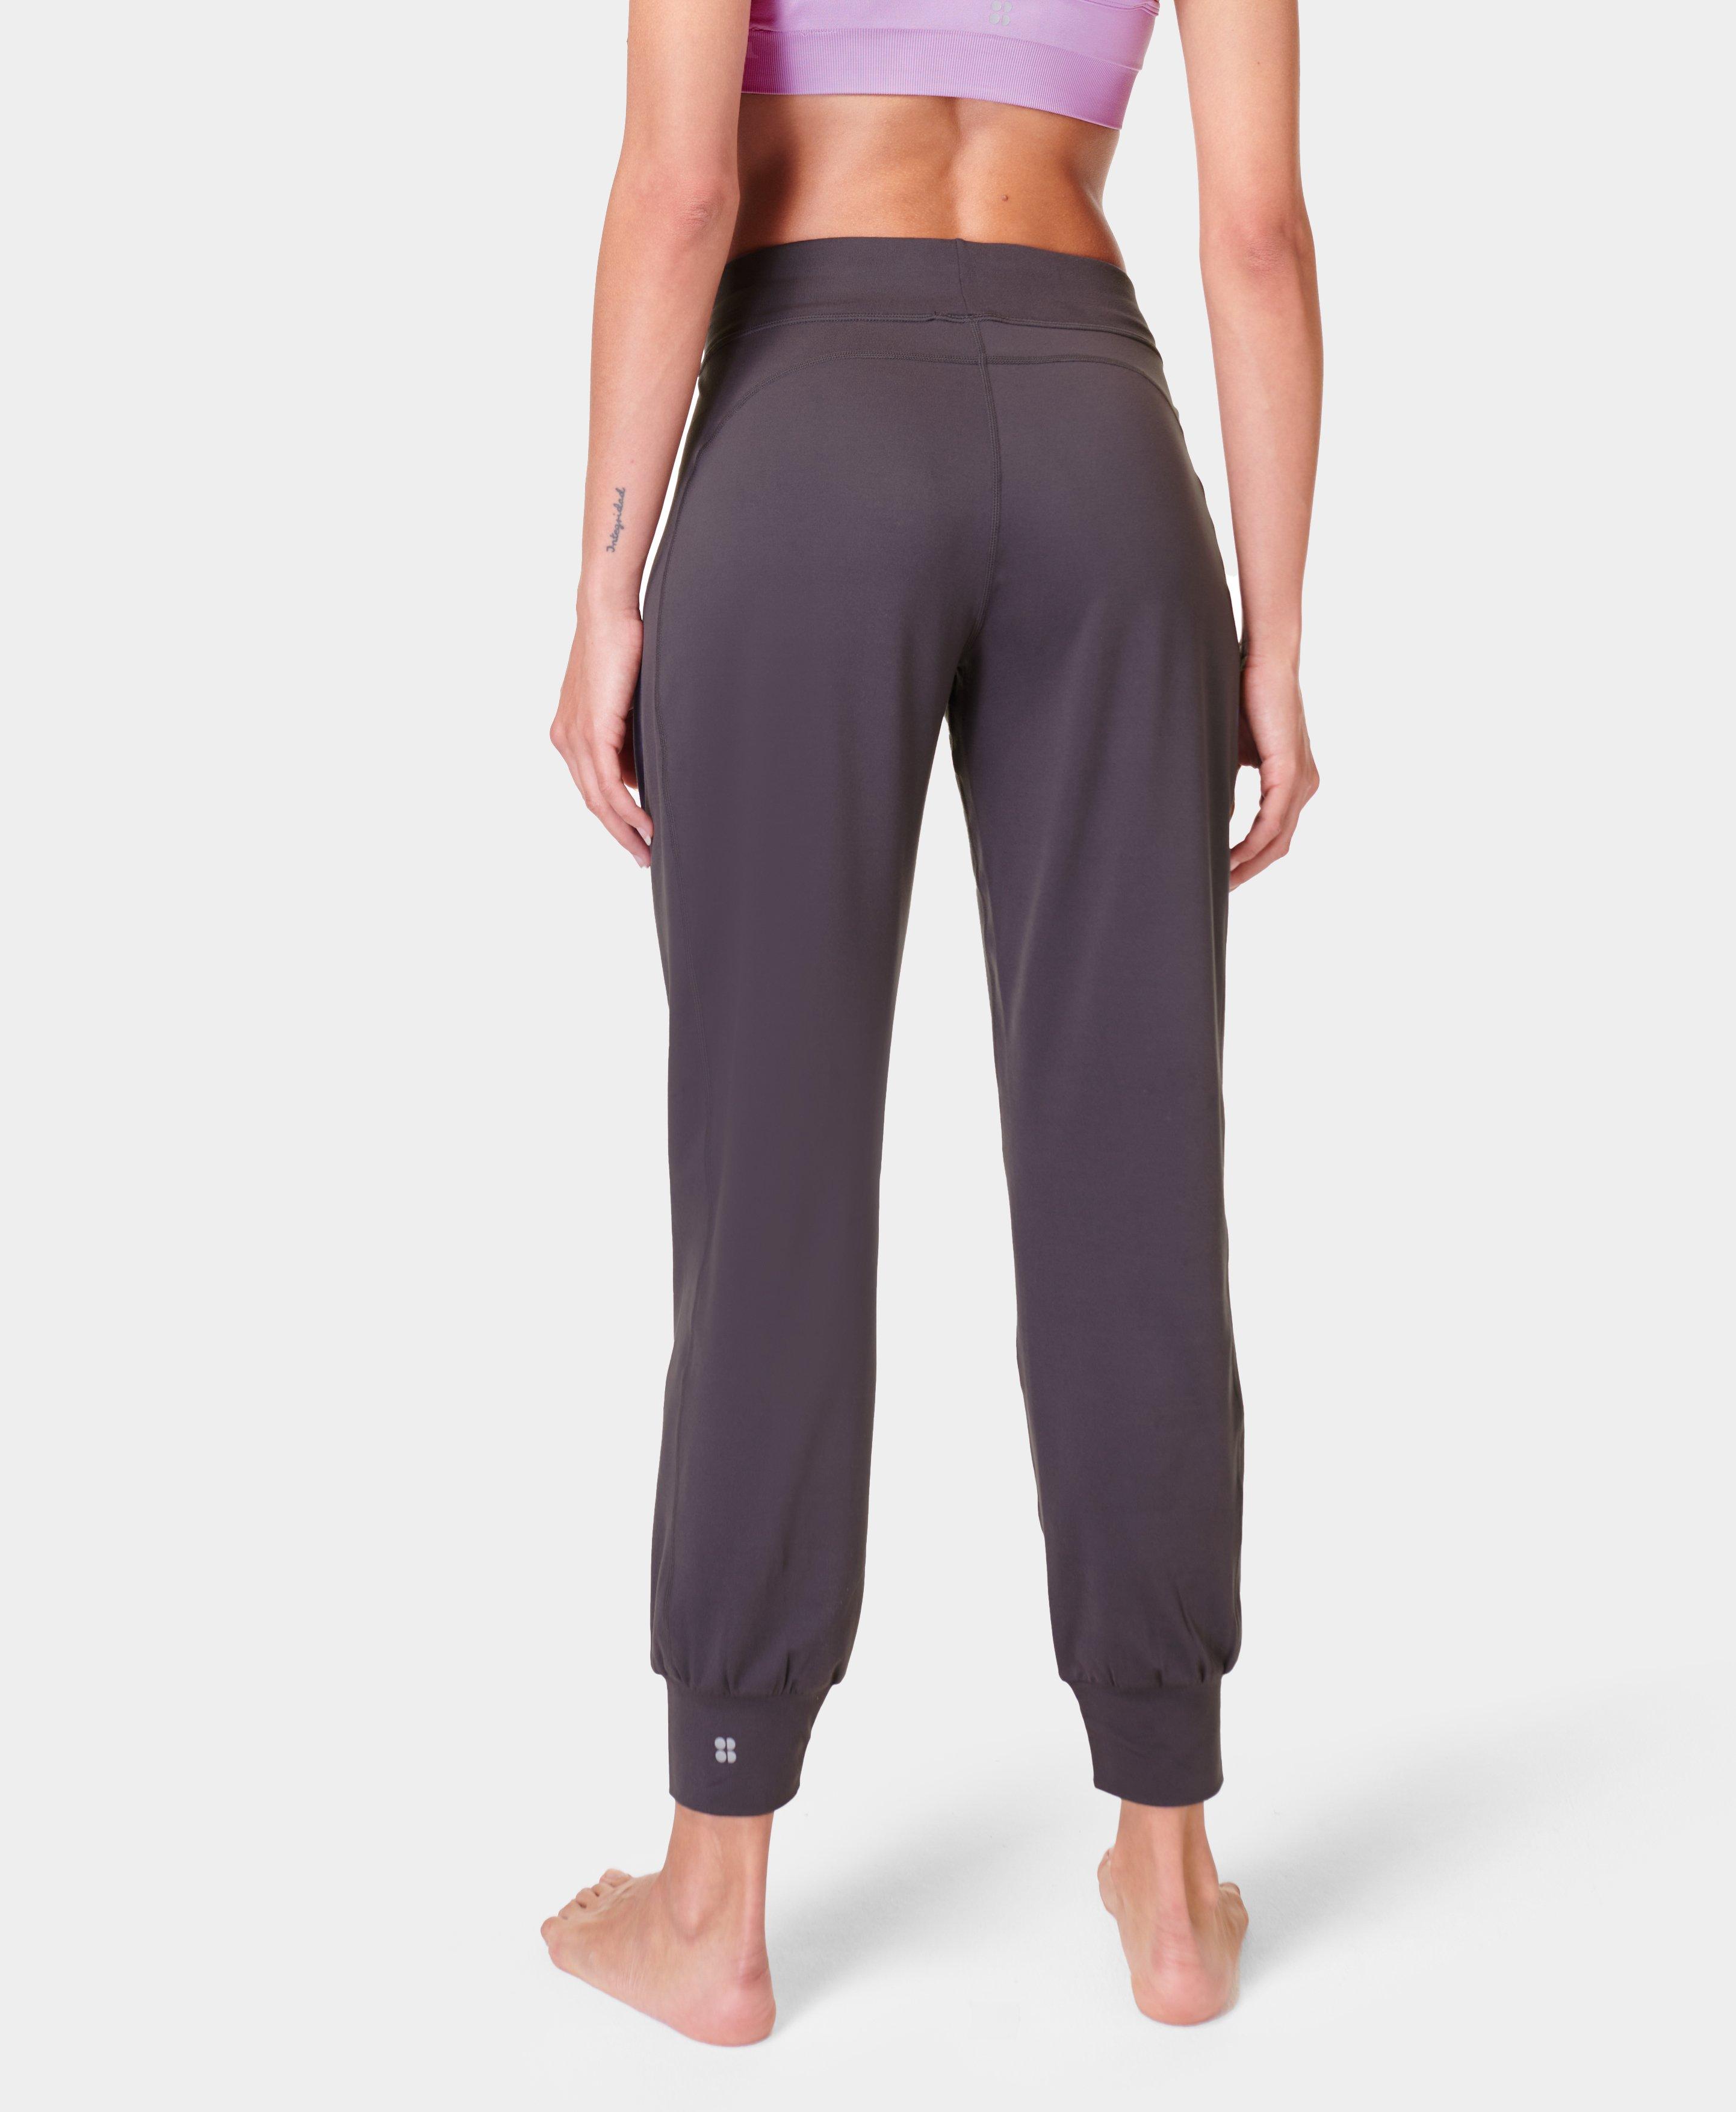 Yoga pants short version(grey)